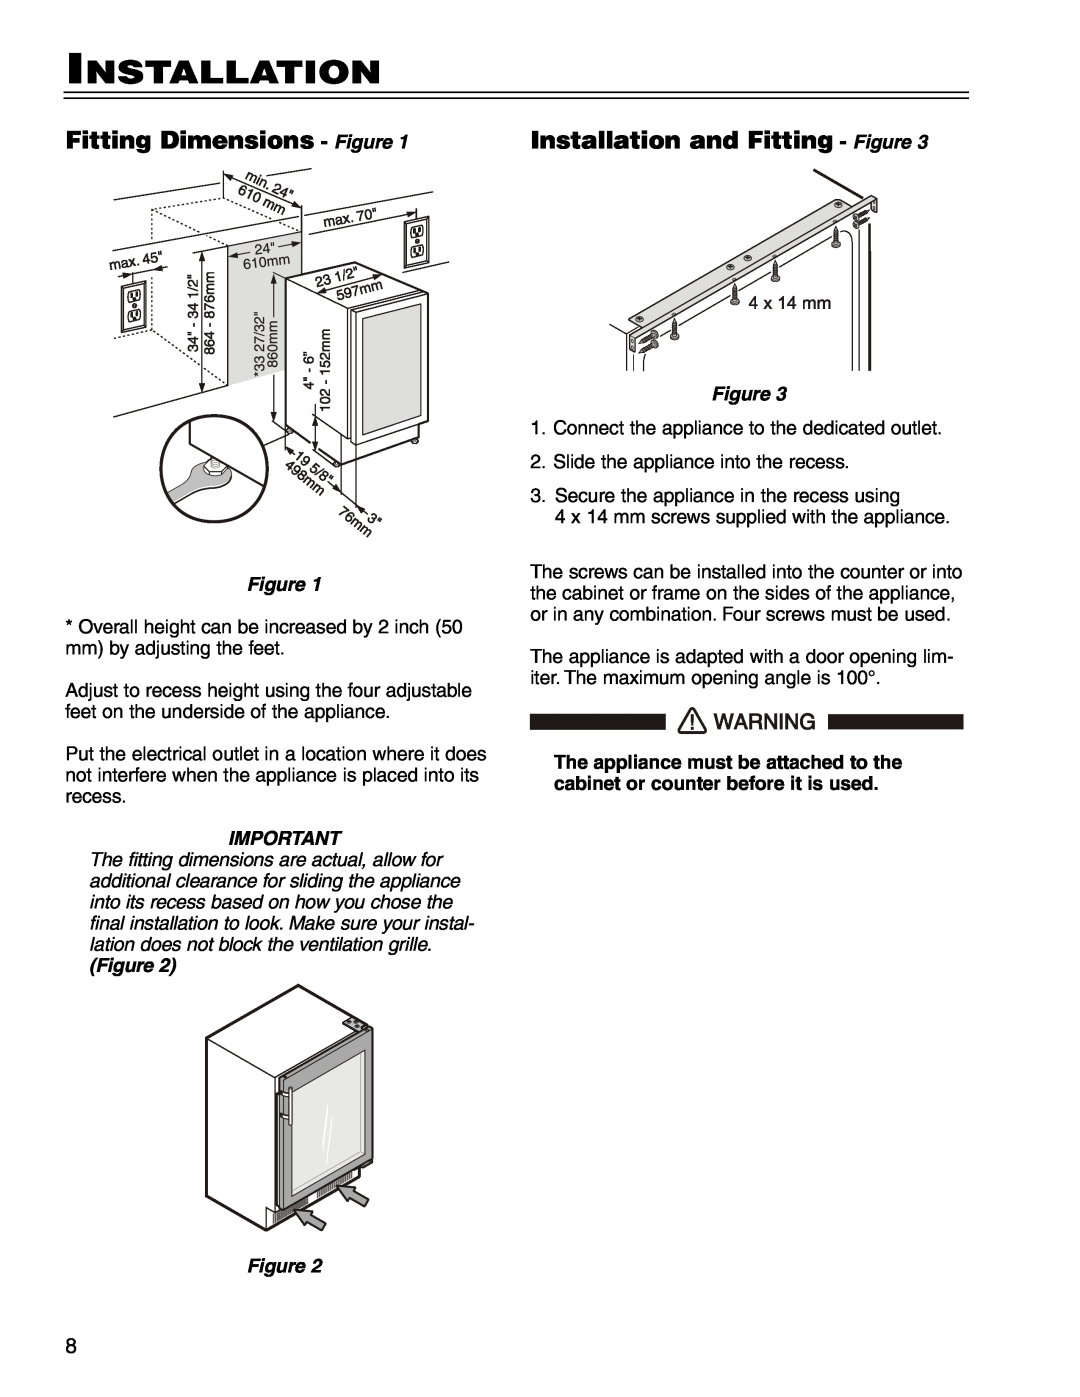 Liebherr RU500 manual Fitting Dimensions - Figure, Installation and Fitting - Figure 